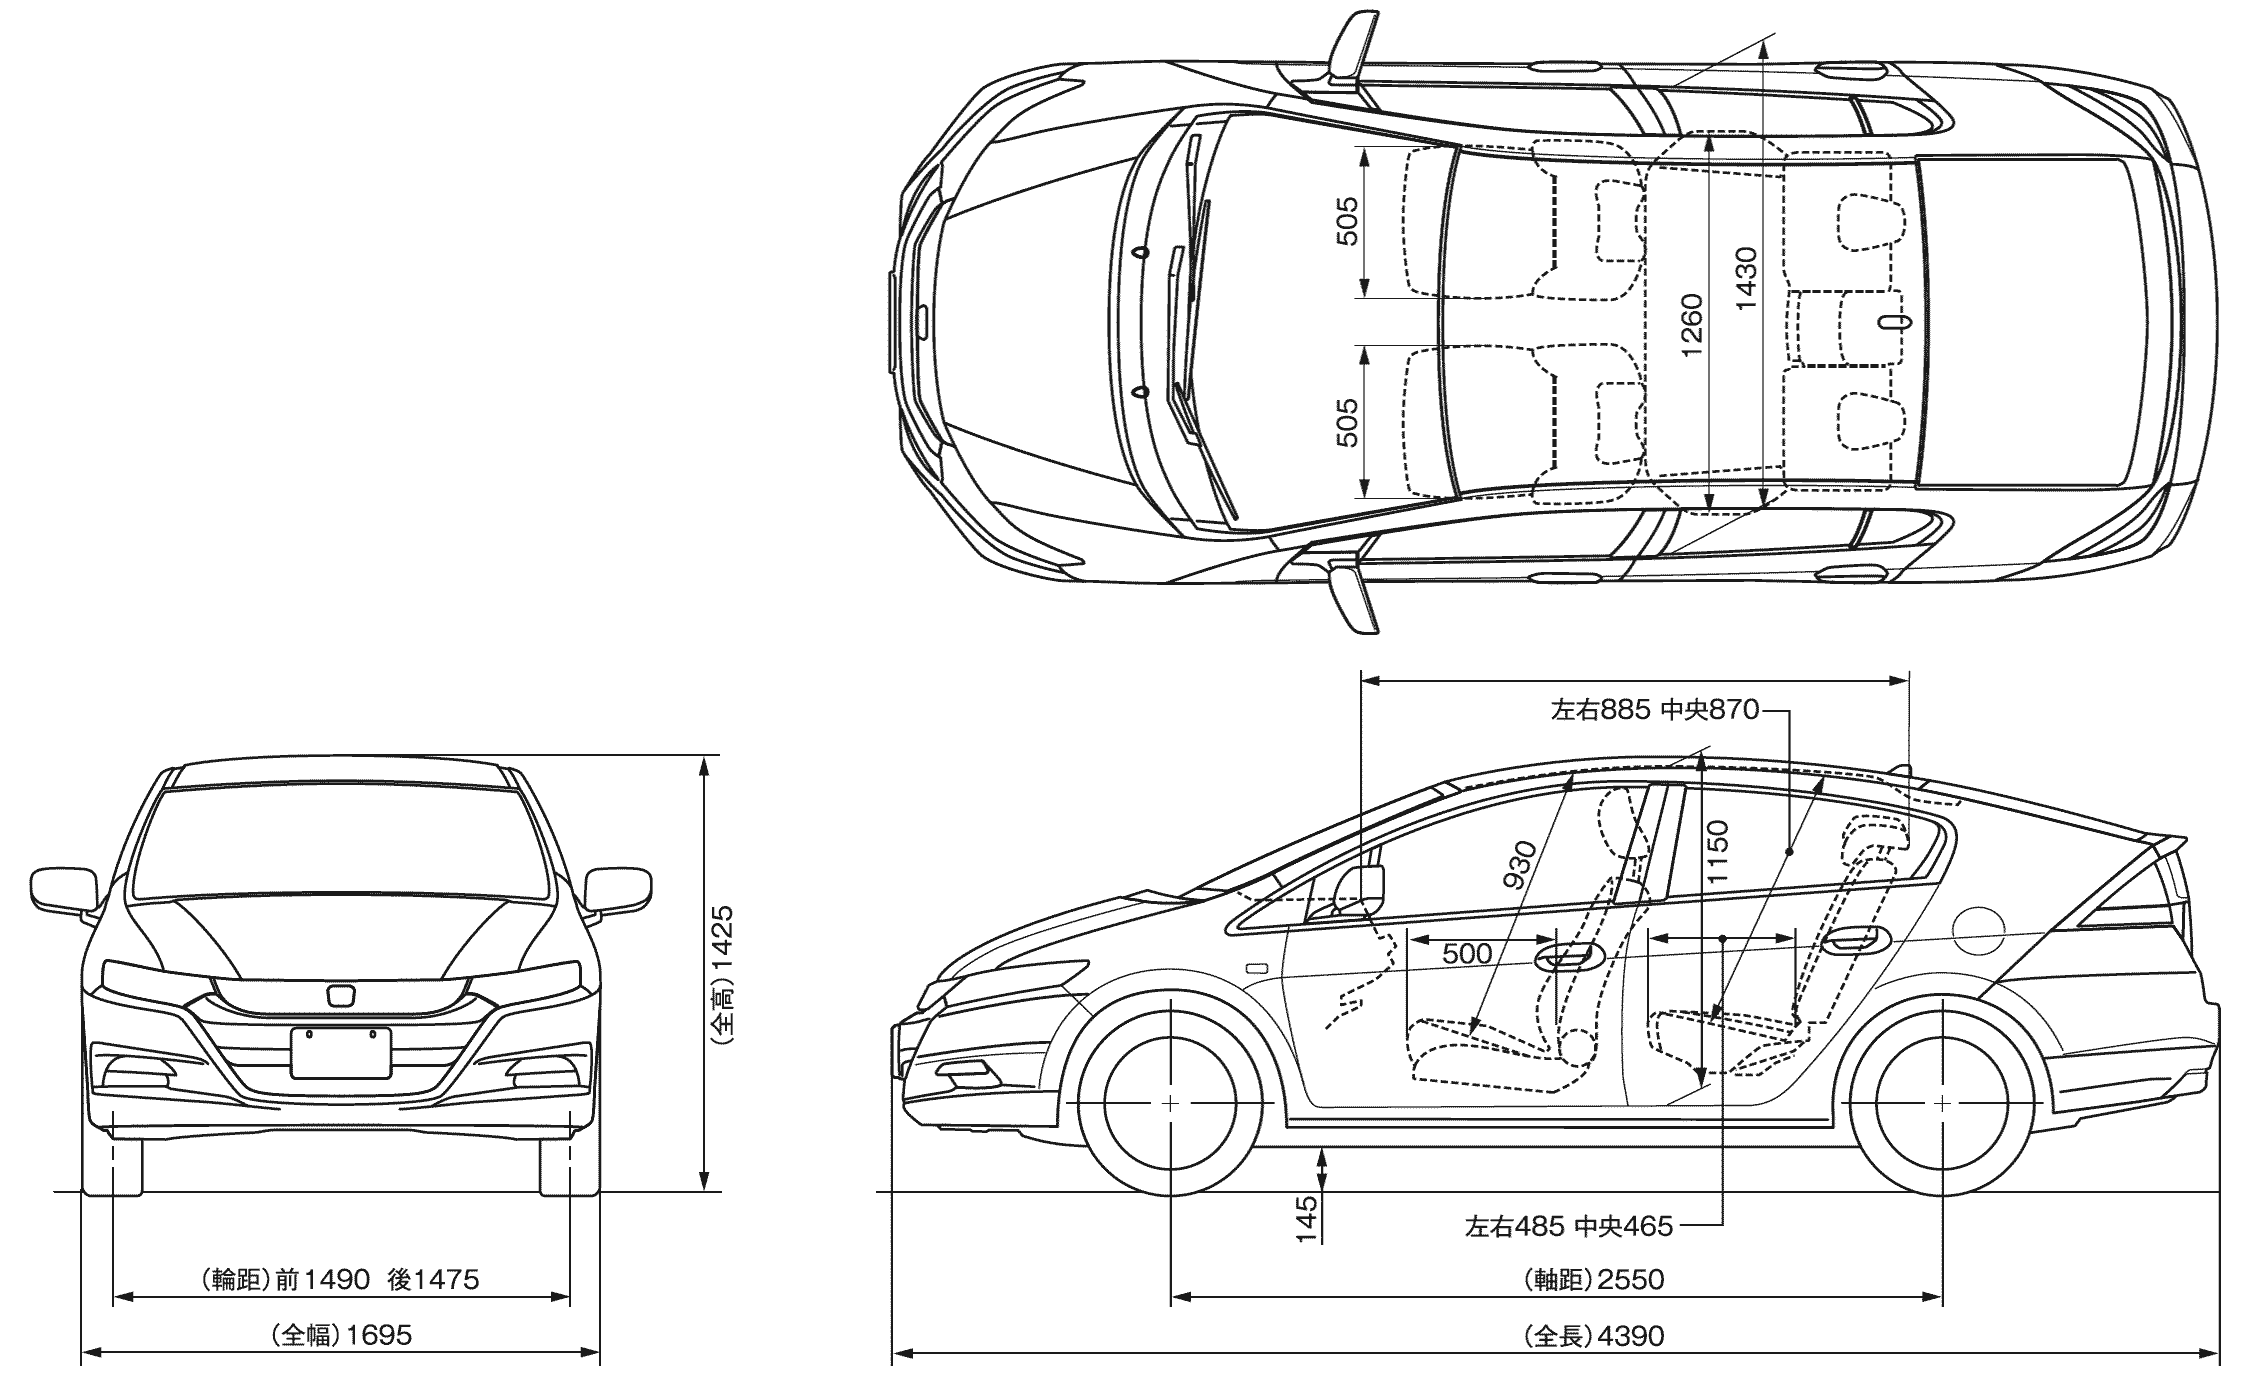 Honda Insight blueprint